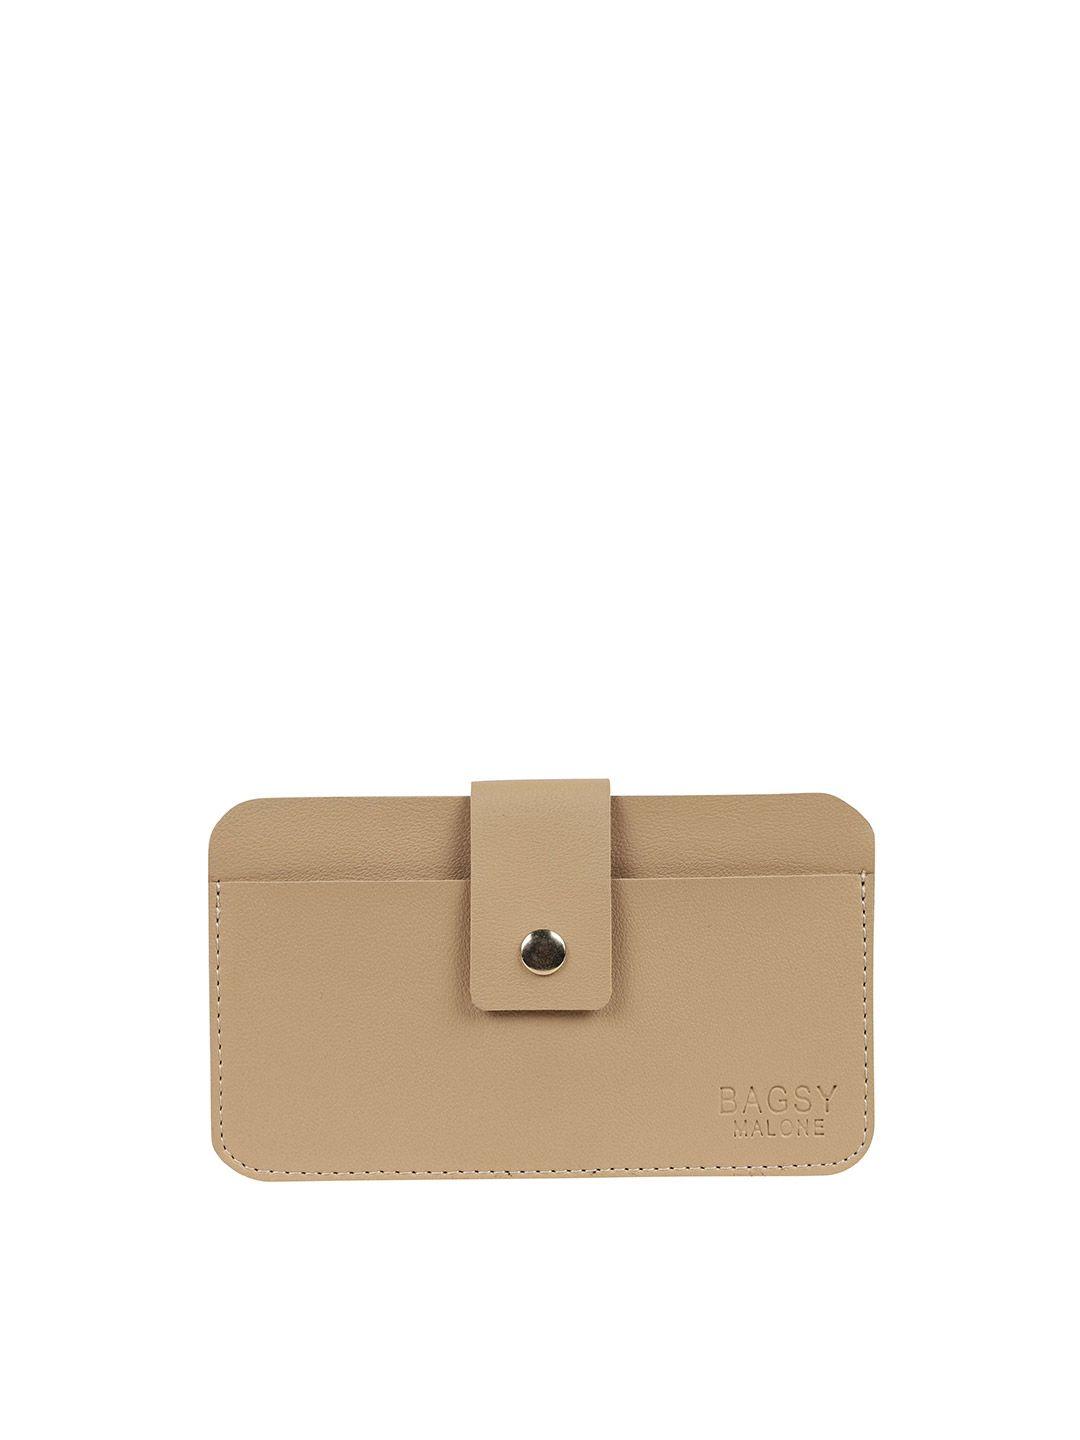 bagsy malone beige mobile purse clutch